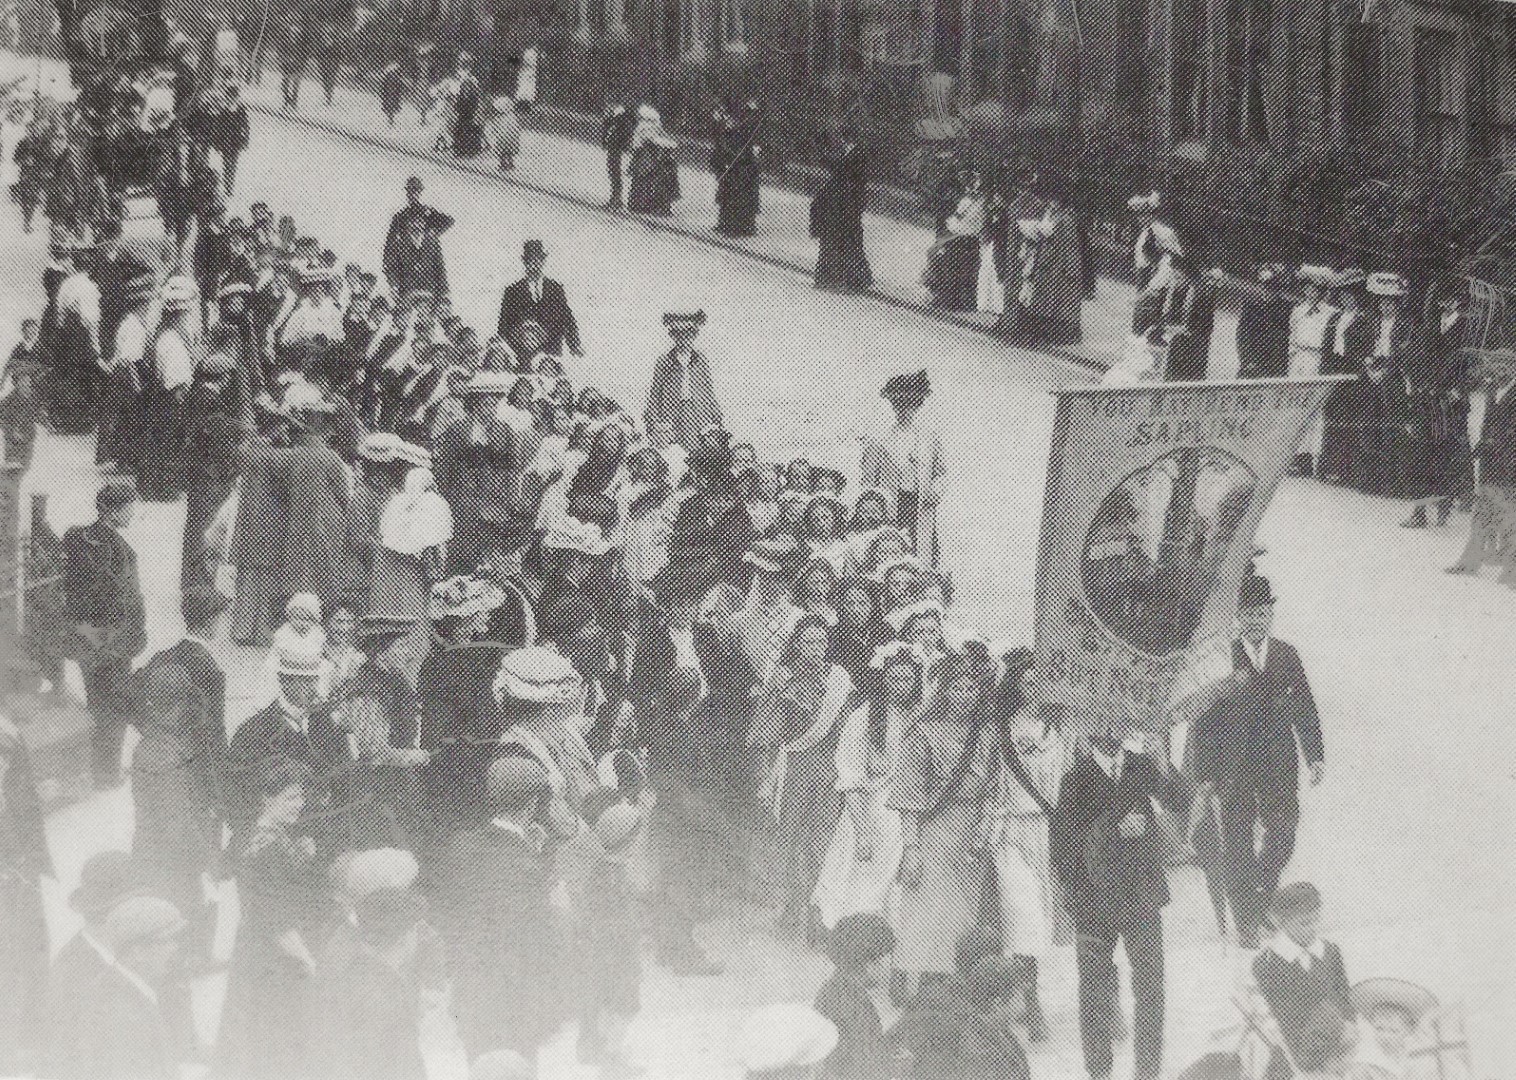 Curzon Street Carnival 1900 BCm